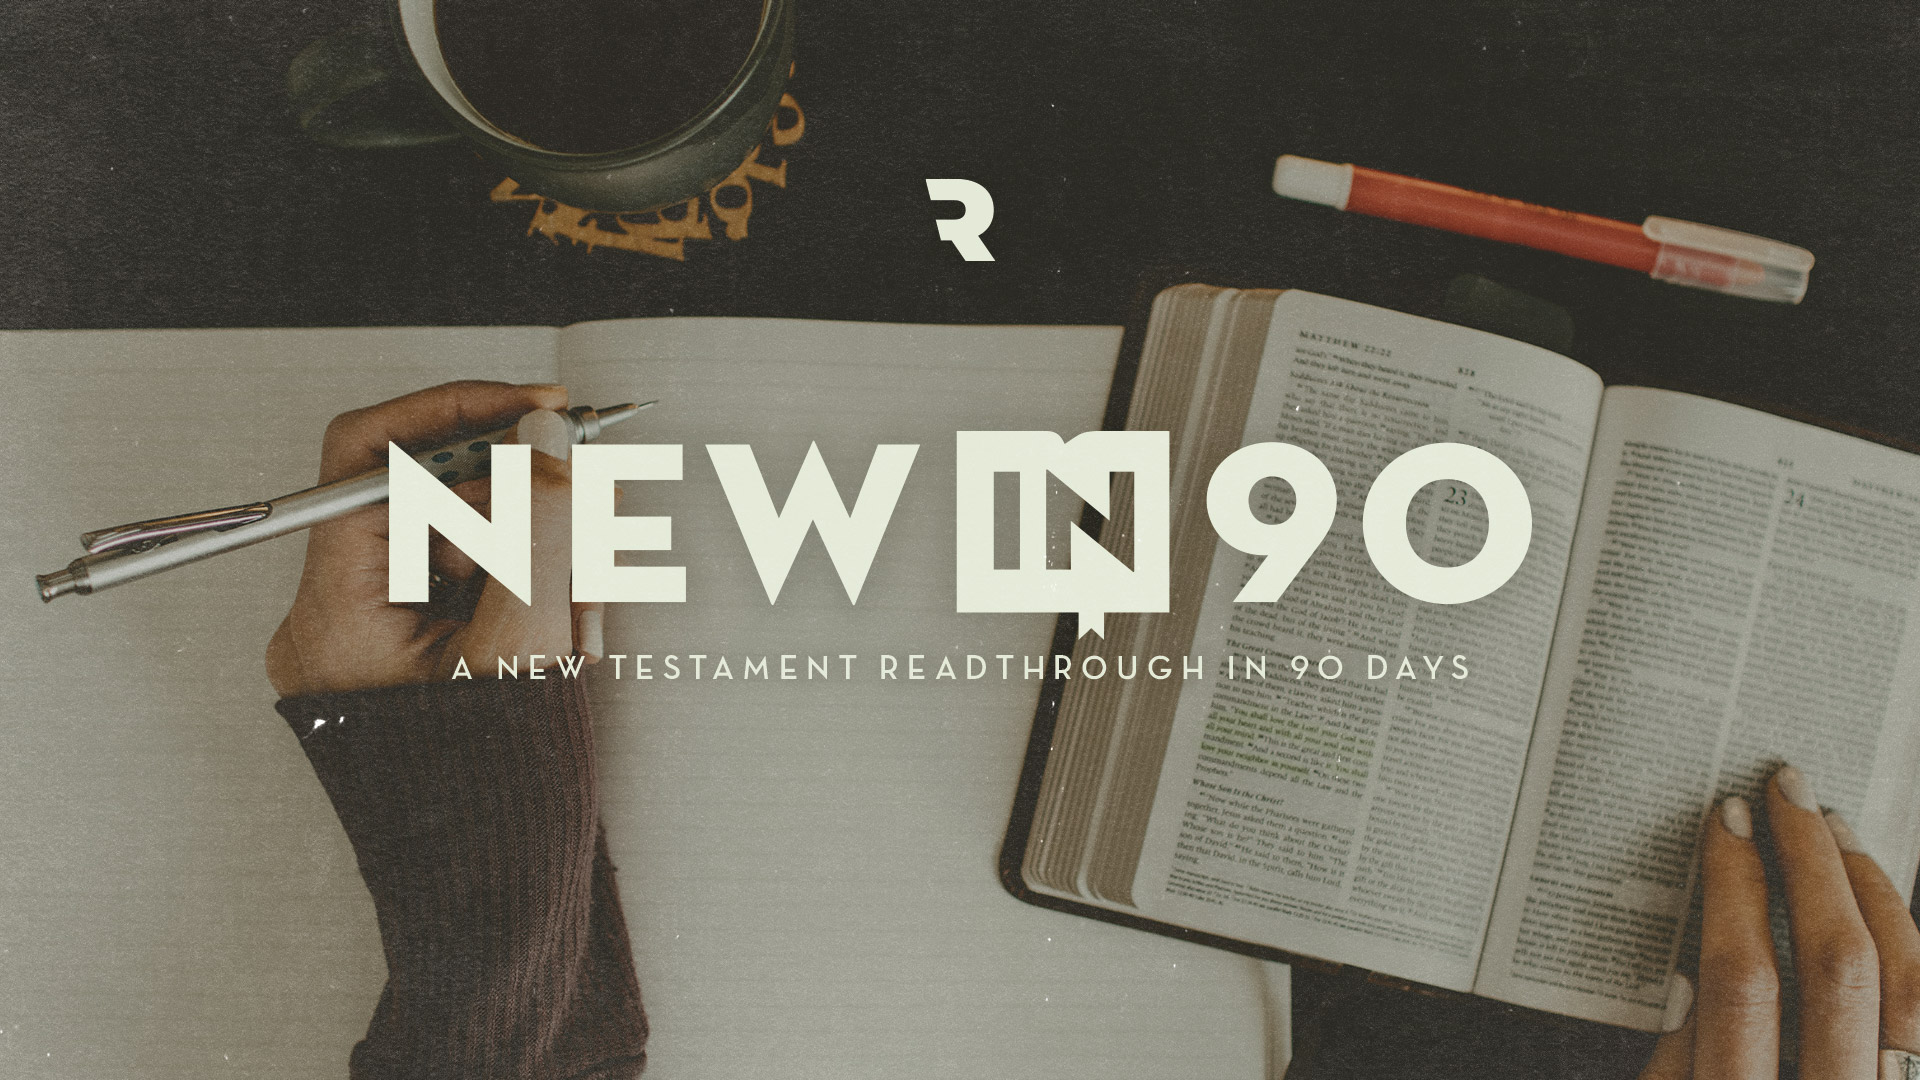 New Testament Reading Plan